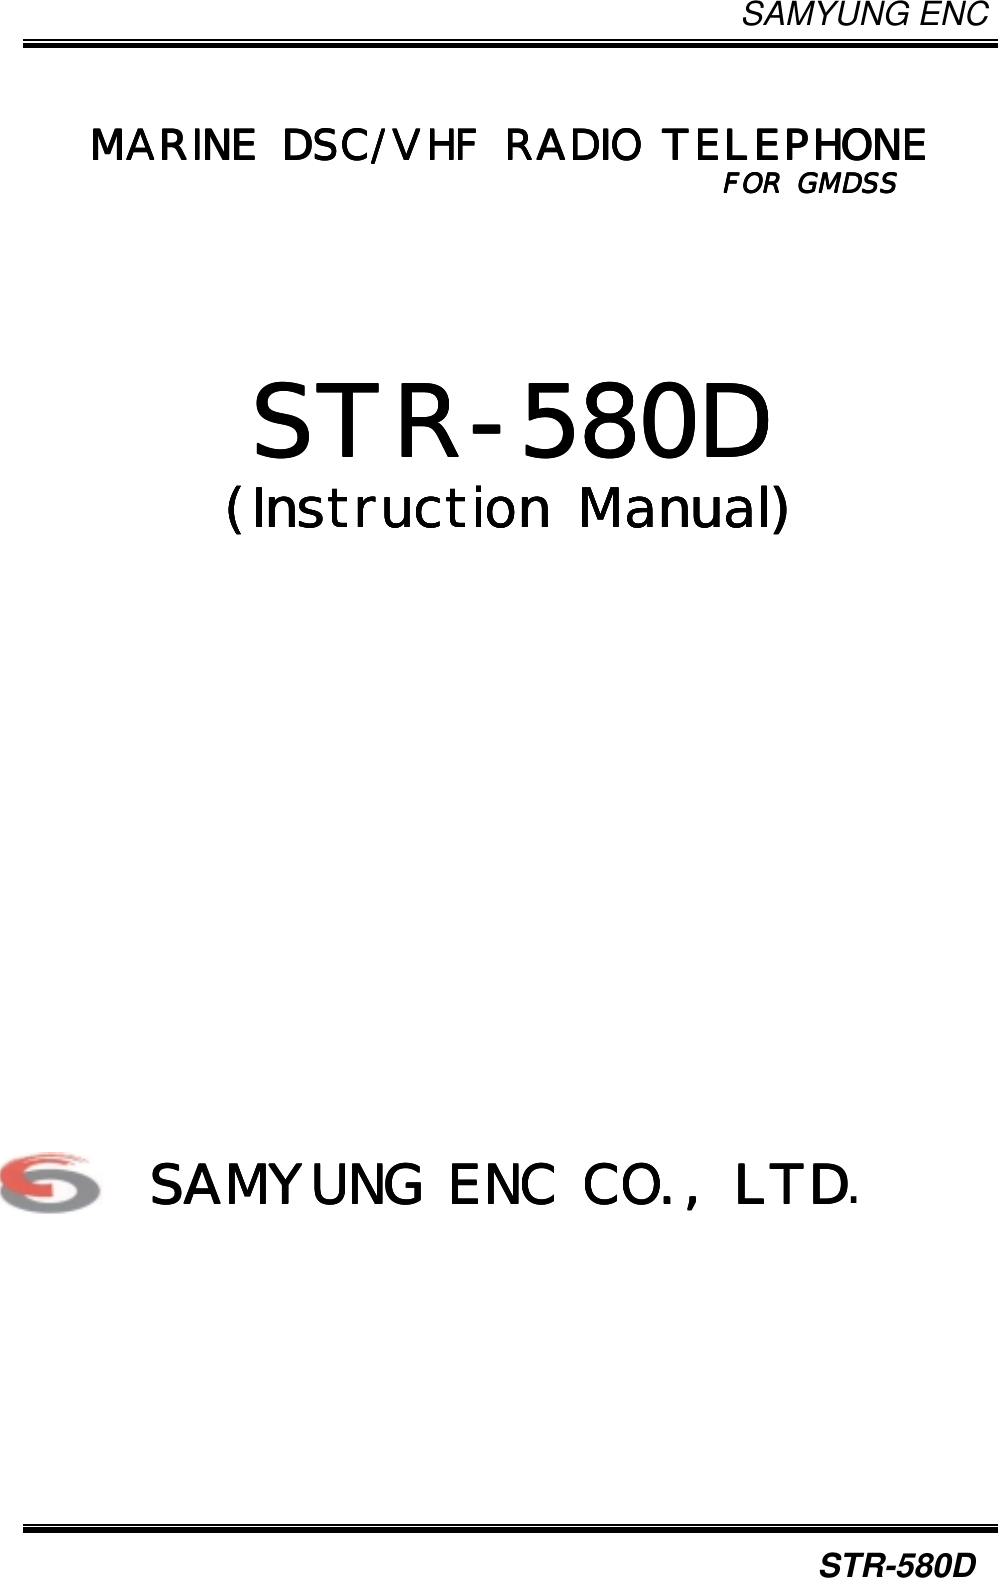 SAMYUNG ENC                                                  STR-580DMARINE DSC/VHF RADIO TELEPHONEMARINE DSC/VHF RADIO TELEPHONEMARINE DSC/VHF RADIO TELEPHONEMARINE DSC/VHF RADIO TELEPHONE                                                                                                                                                                                FOR GMDSSFOR GMDSSFOR GMDSSFOR GMDSS    STRSTRSTRSTR----580D580D580D580D    (Instruction Manual)(Instruction Manual)(Instruction Manual)(Instruction Manual)                 SAMYUNG SAMYUNG SAMYUNG SAMYUNG ENCENCENCENC CO., LTD CO., LTD CO., LTD CO., LTD. 